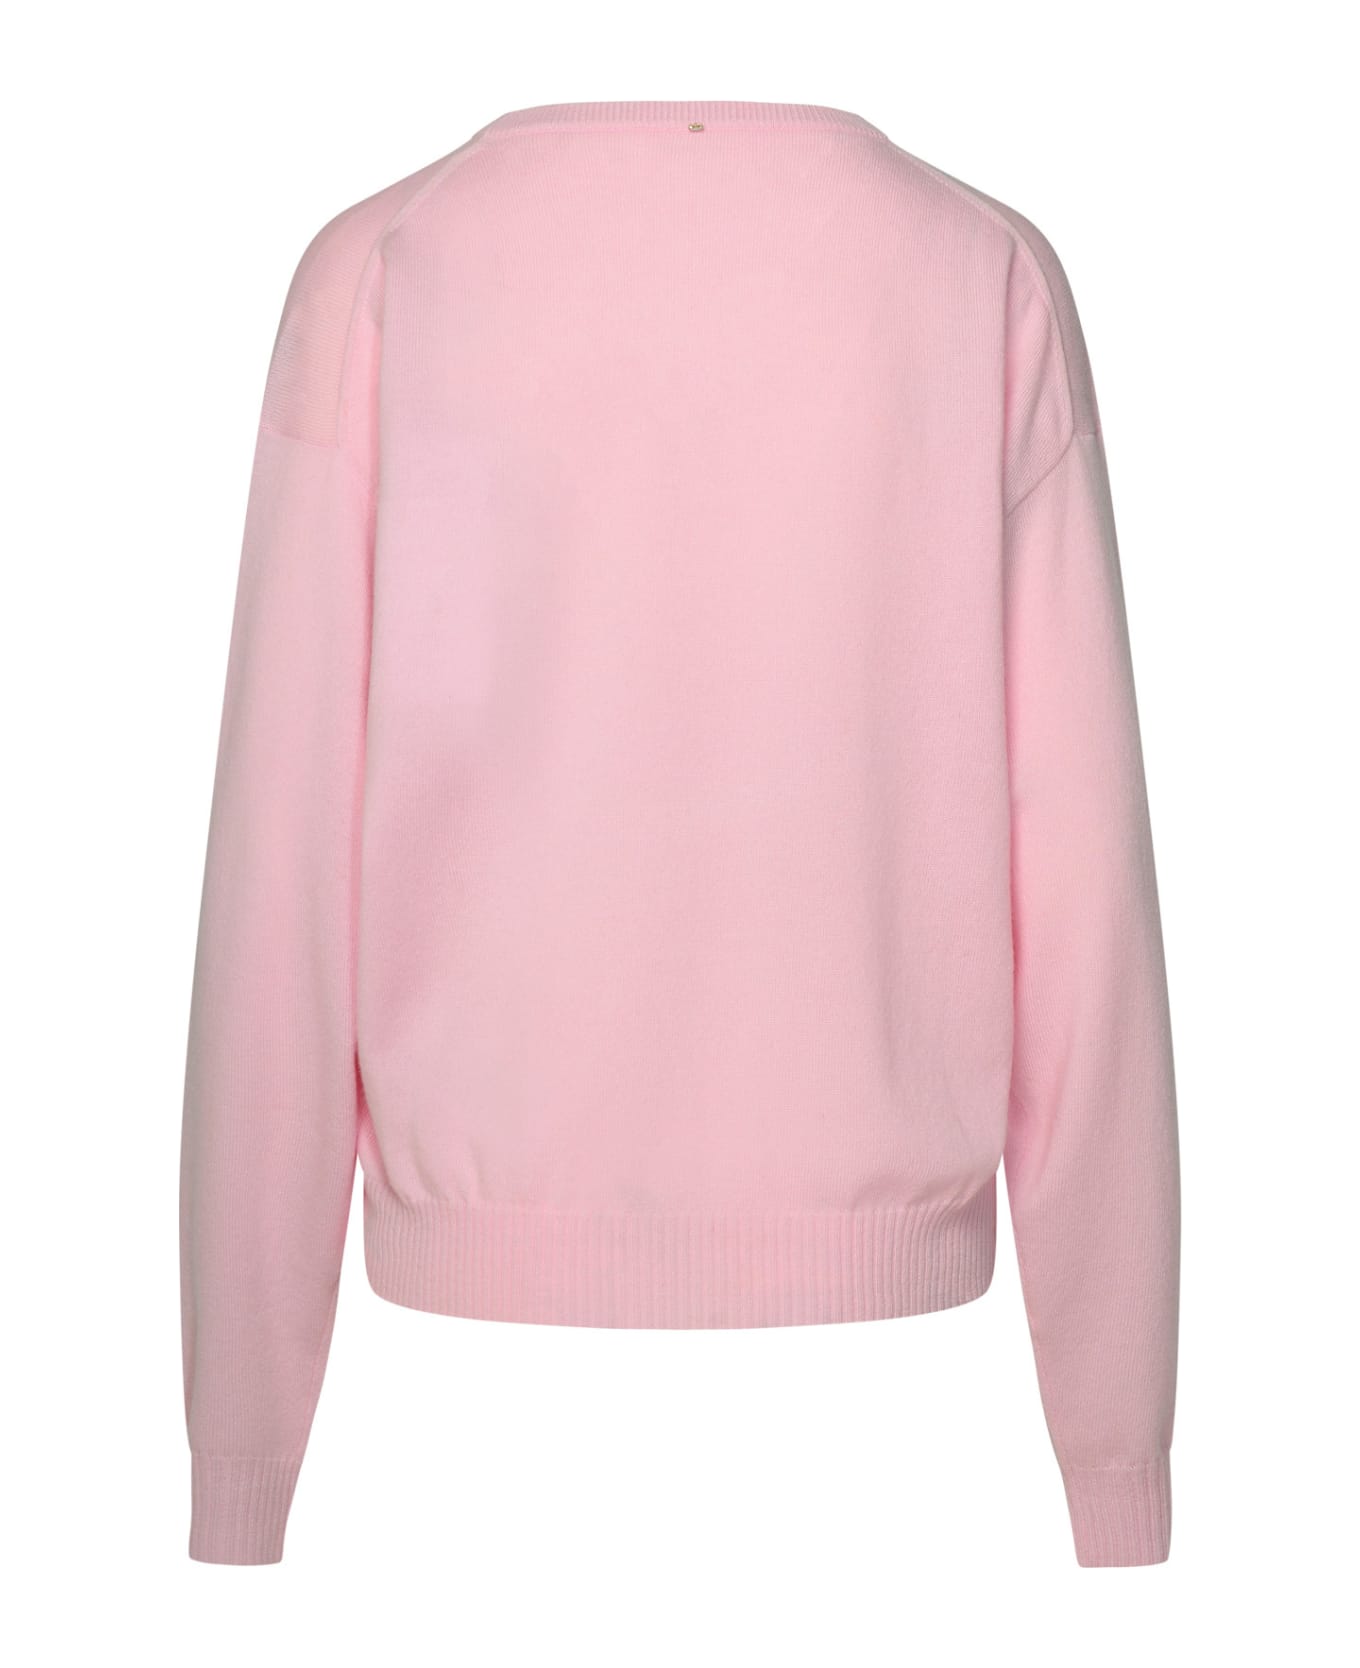 SportMax Pink Wool Blend Sweater - Pink ニットウェア